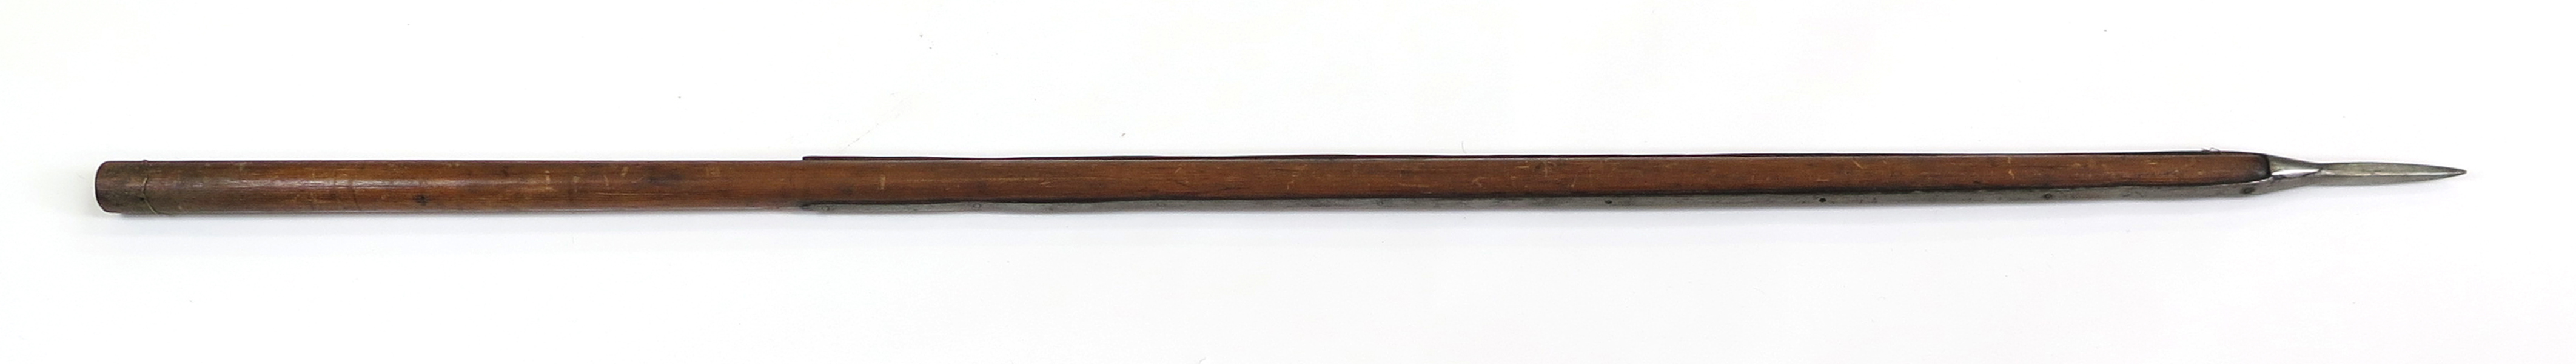 Infanteripik, smide med träskaft, 1600-tal (?), längd 159 cm, kortad_33399a_8dbe04f9e1ad2c1_lg.jpeg